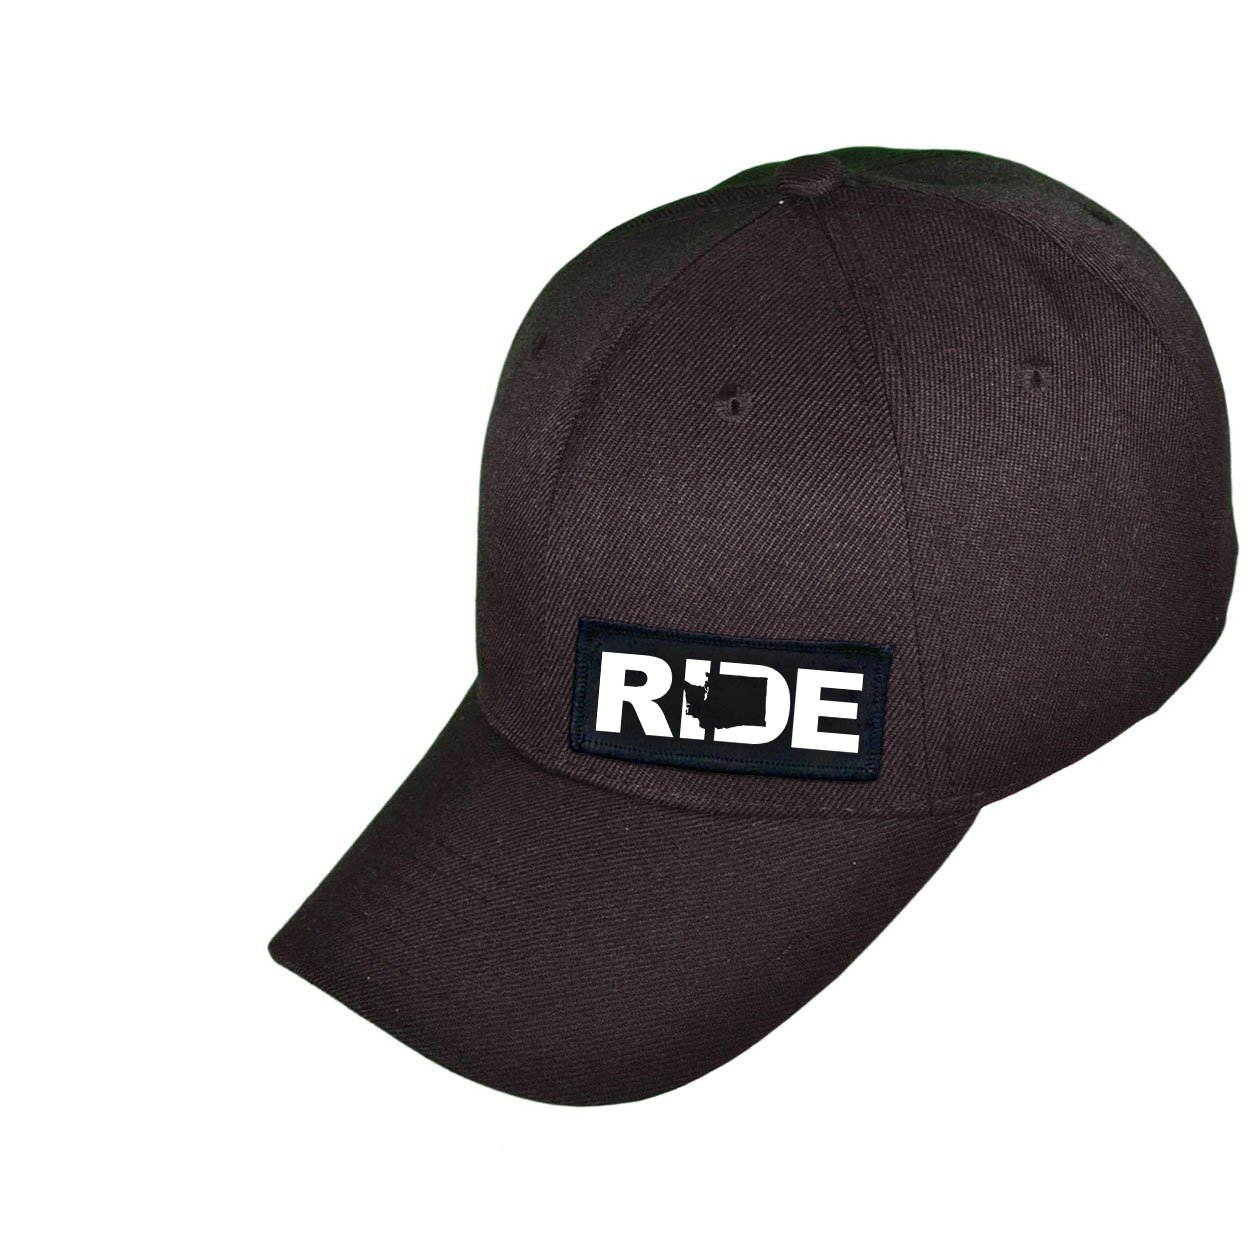 Ride Washington Night Out Woven Patch Velcro Trucker Hat Black (White Logo)